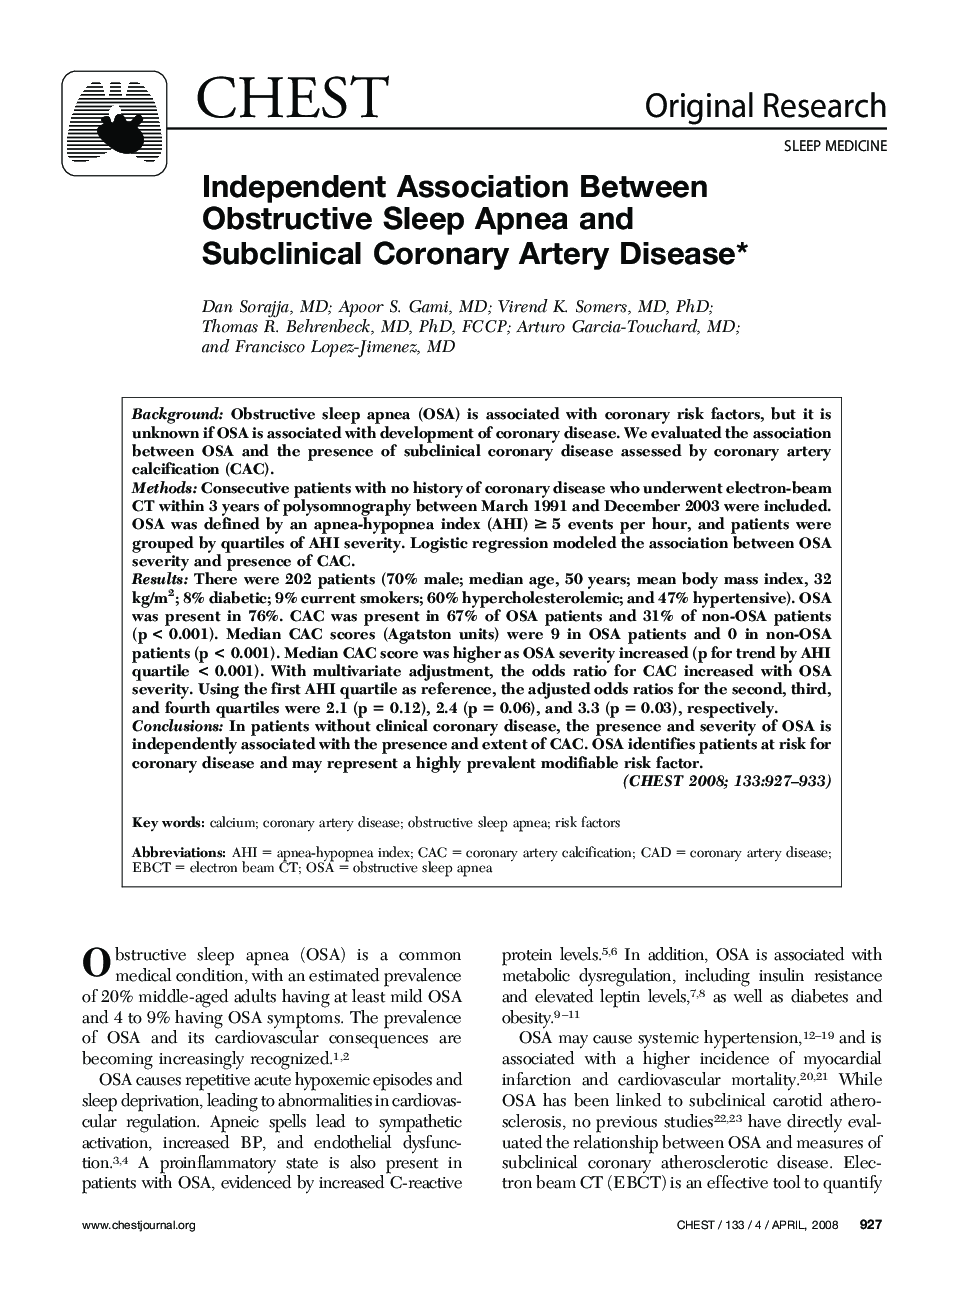 Independent Association Between Obstructive Sleep Apnea and Subclinical Coronary Artery Disease 